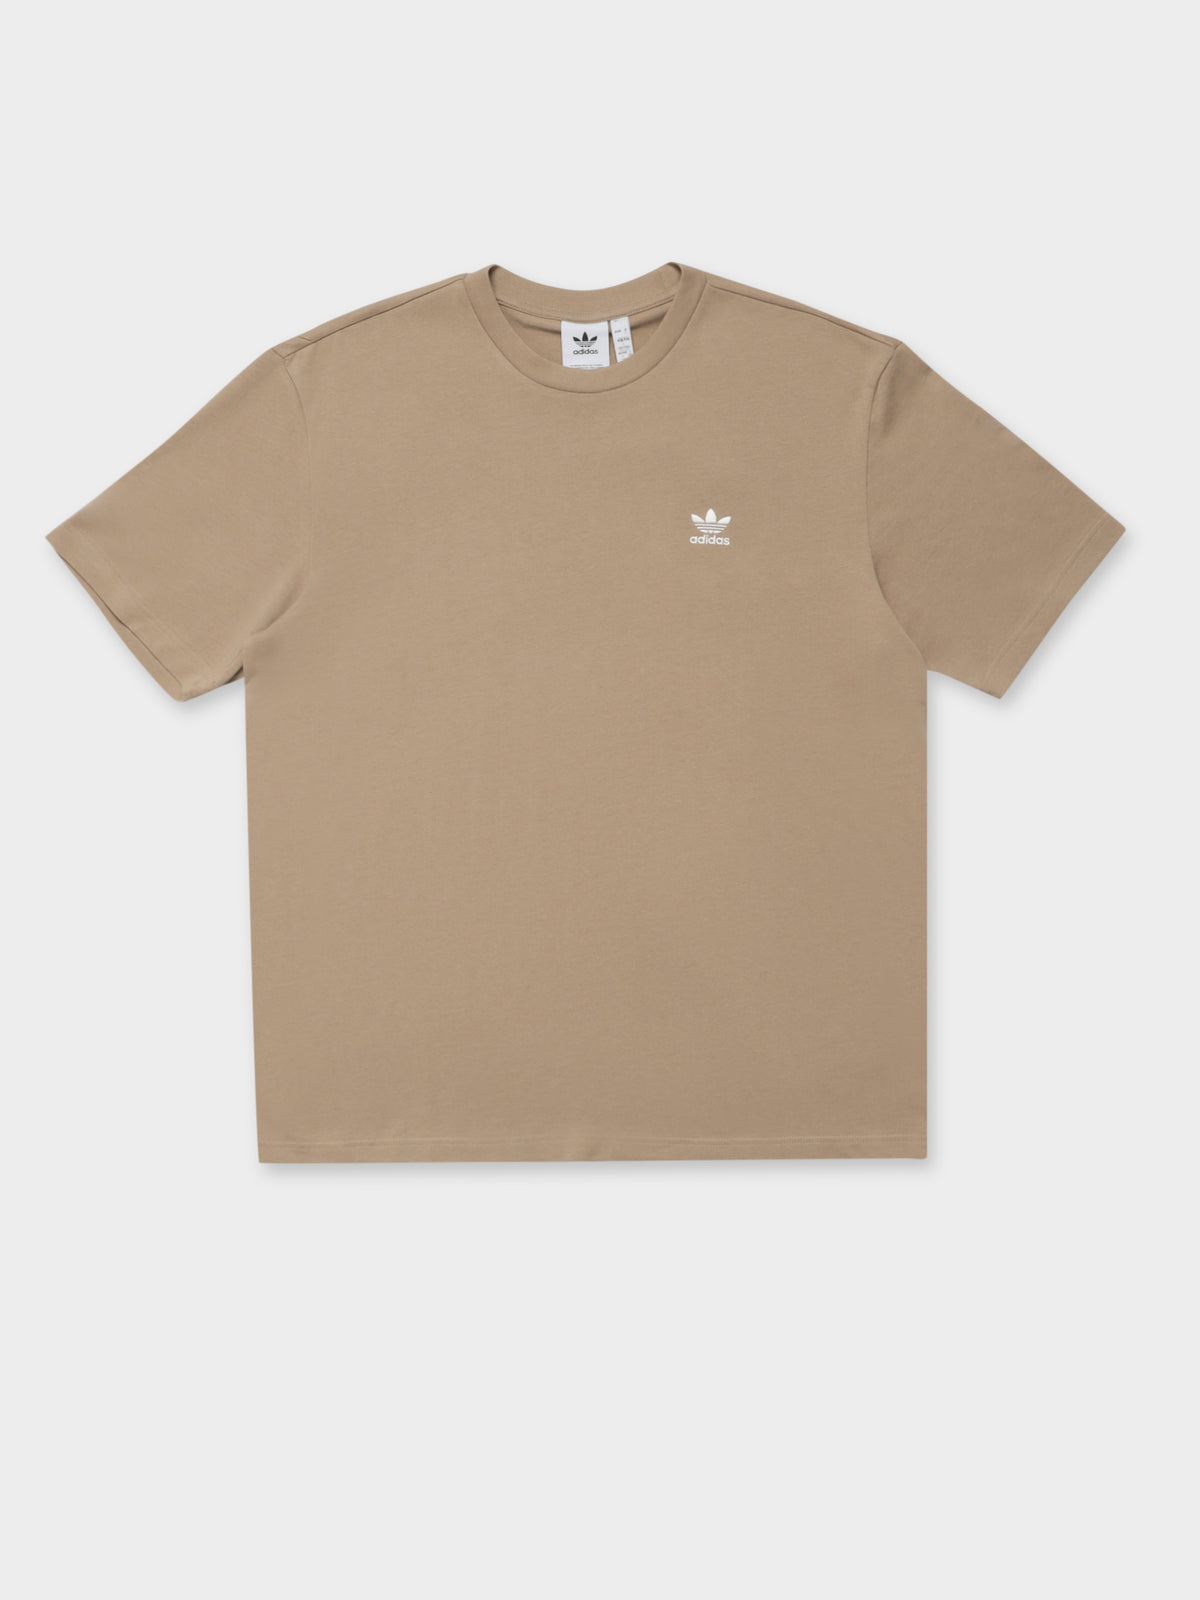 Trefoil Boxy T-Shirt in Tan